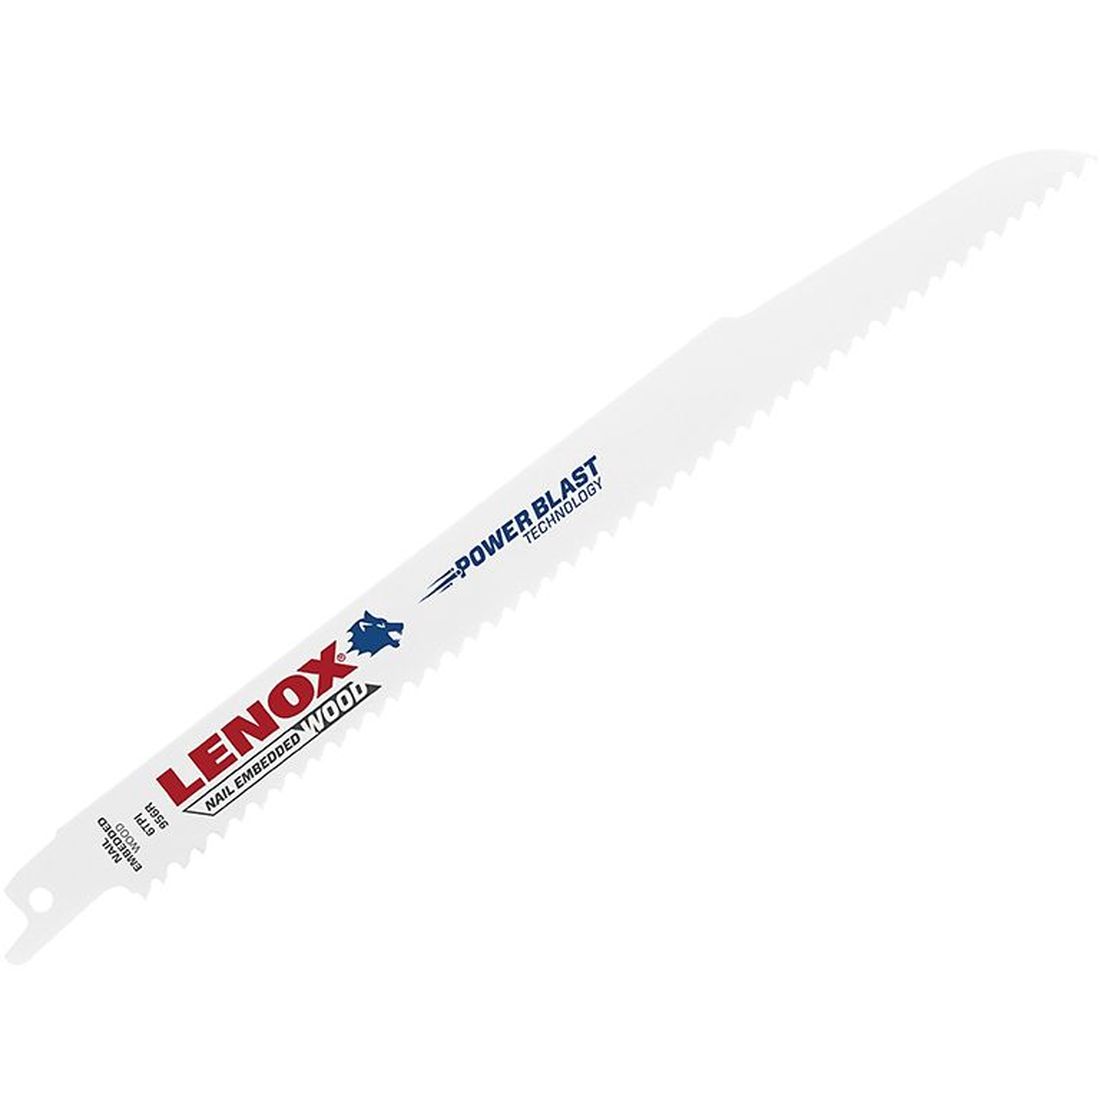 LENOX 20582-956R Wood Cutting Reciprocating Saw Blades 230mm 6 TPI (Pack 5)           